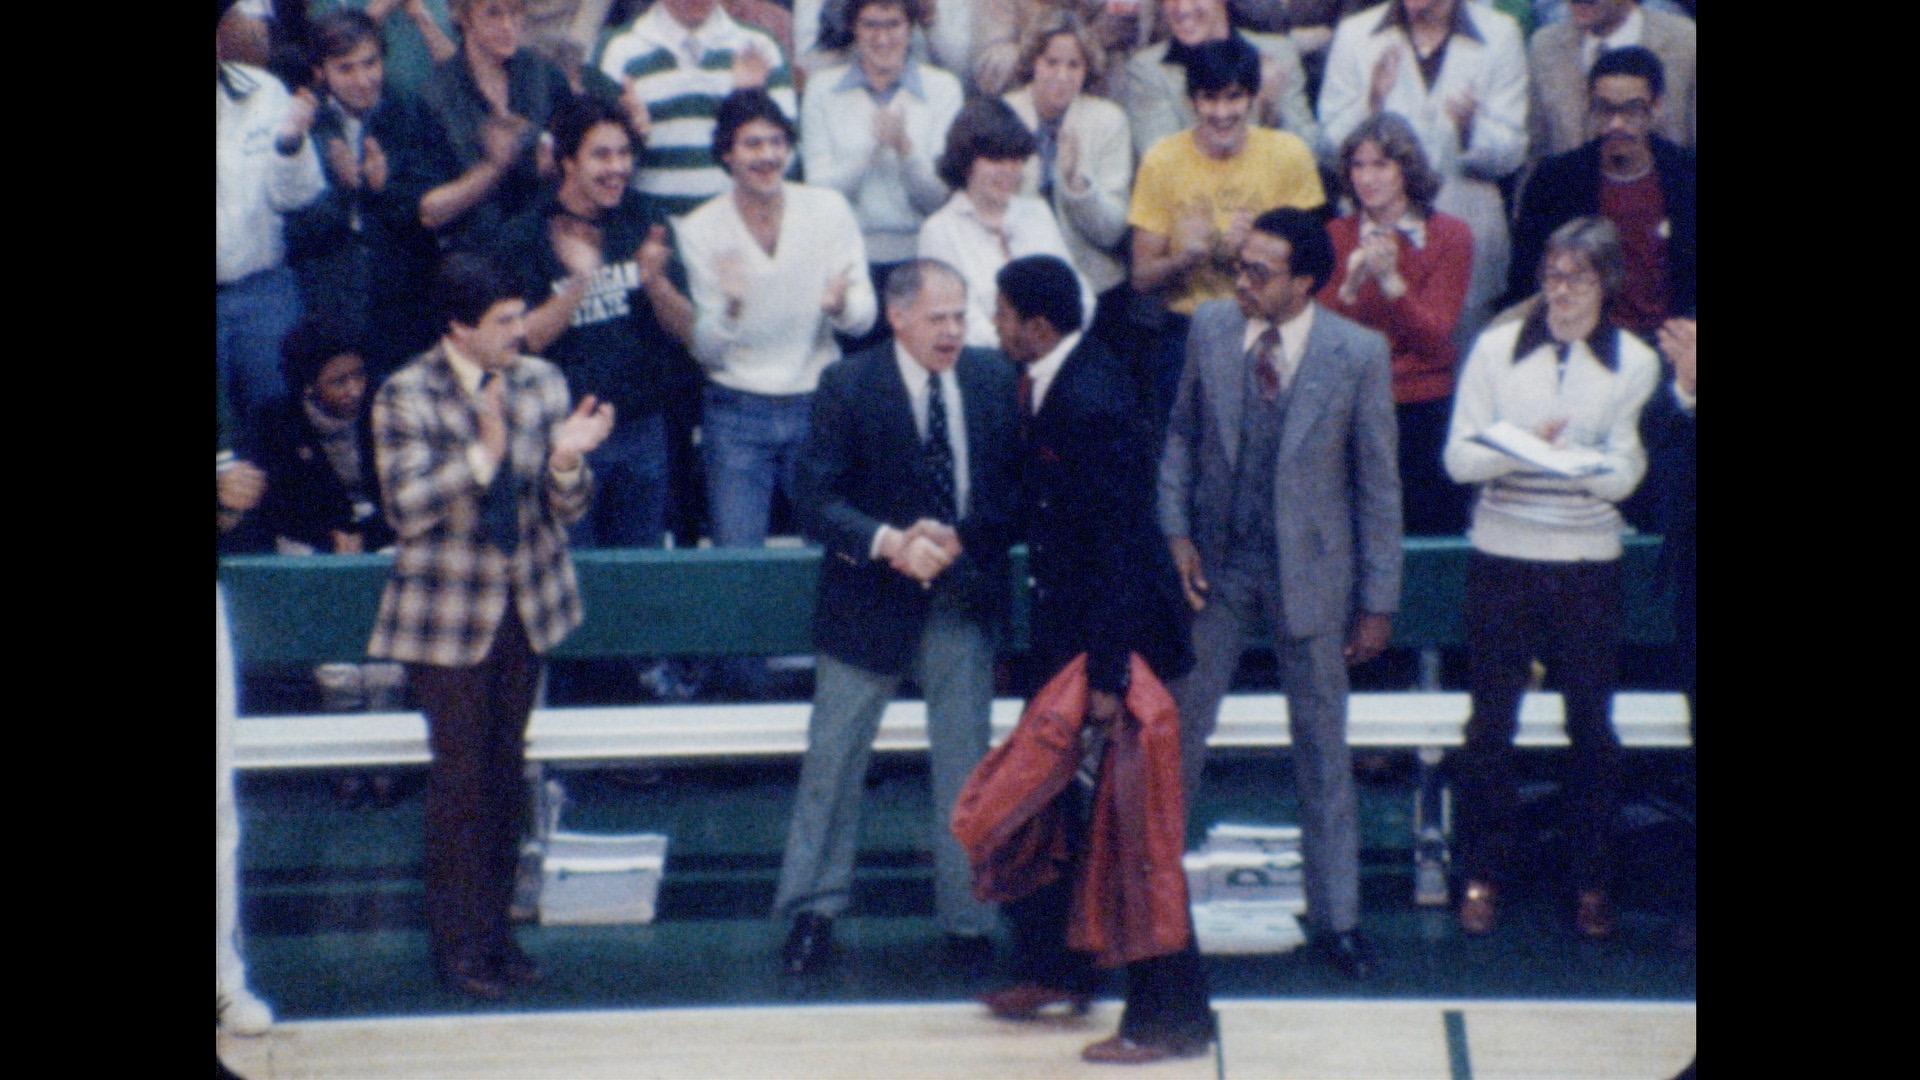 MSU Basketball vs. Purdue (home), 1980